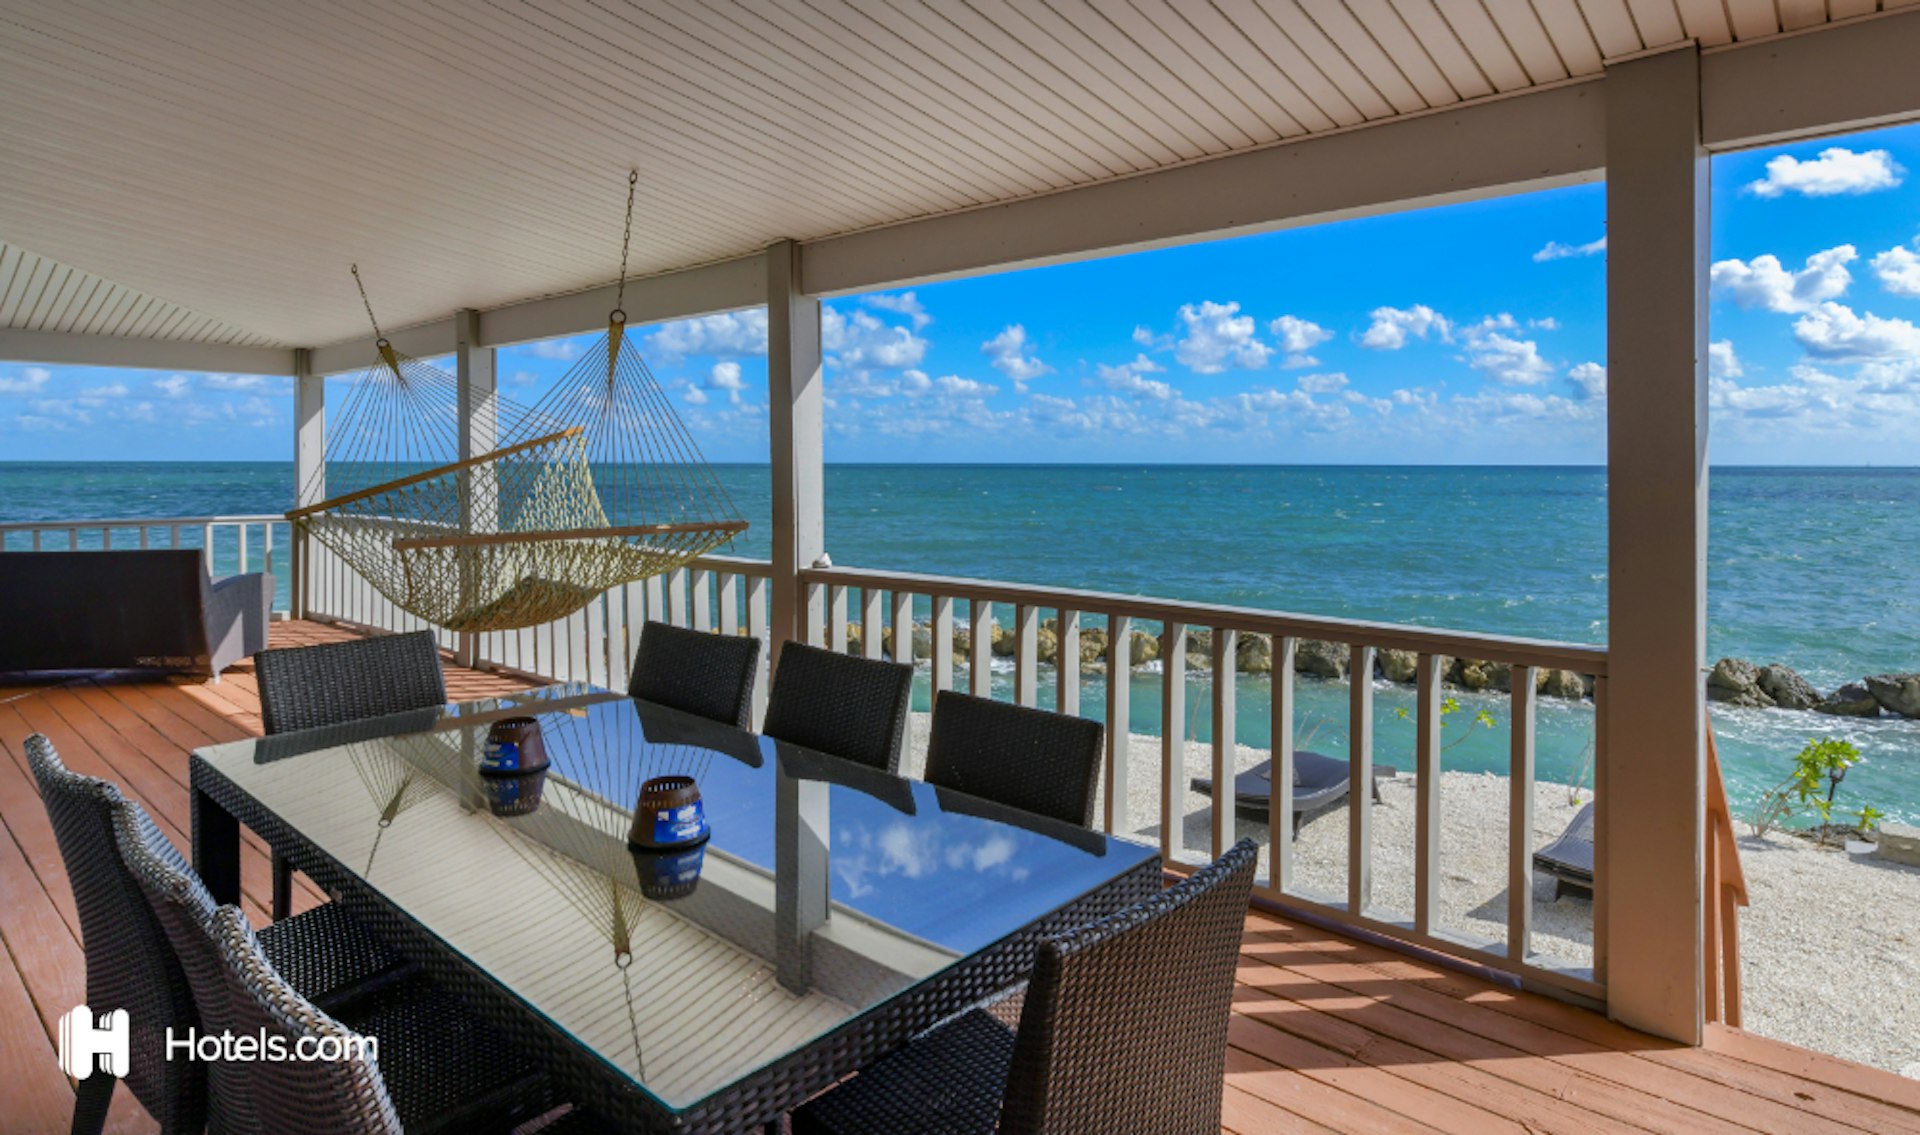 The veranda on Friendsgiving Island in Florida